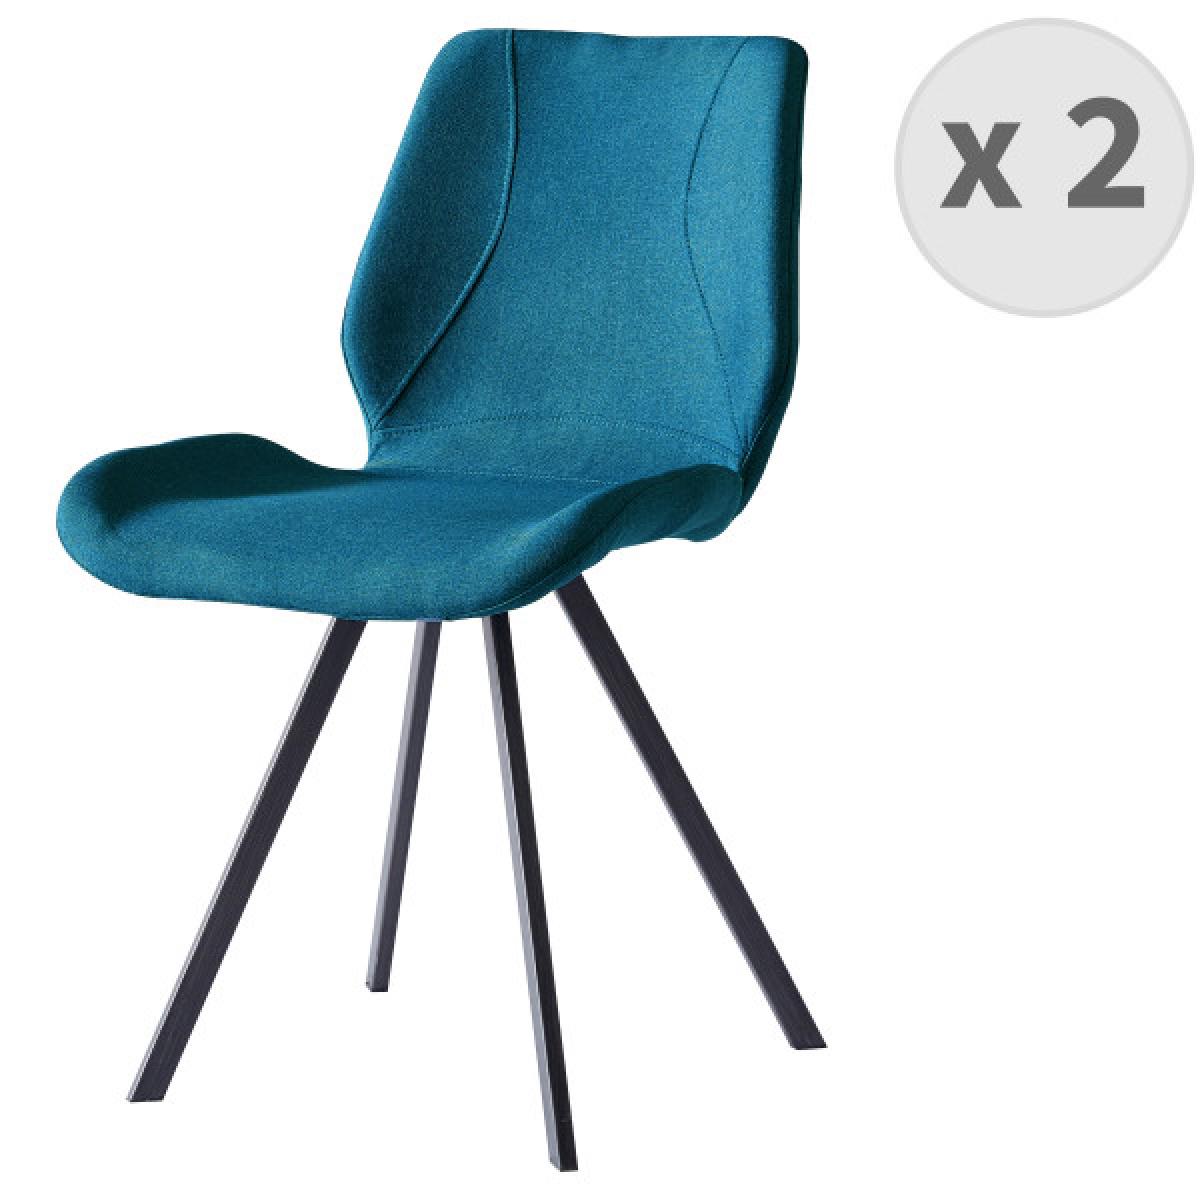 Moloo - HALIFAX-Chaise indus tissu bleu pieds noir brossé (x2) - Chaises